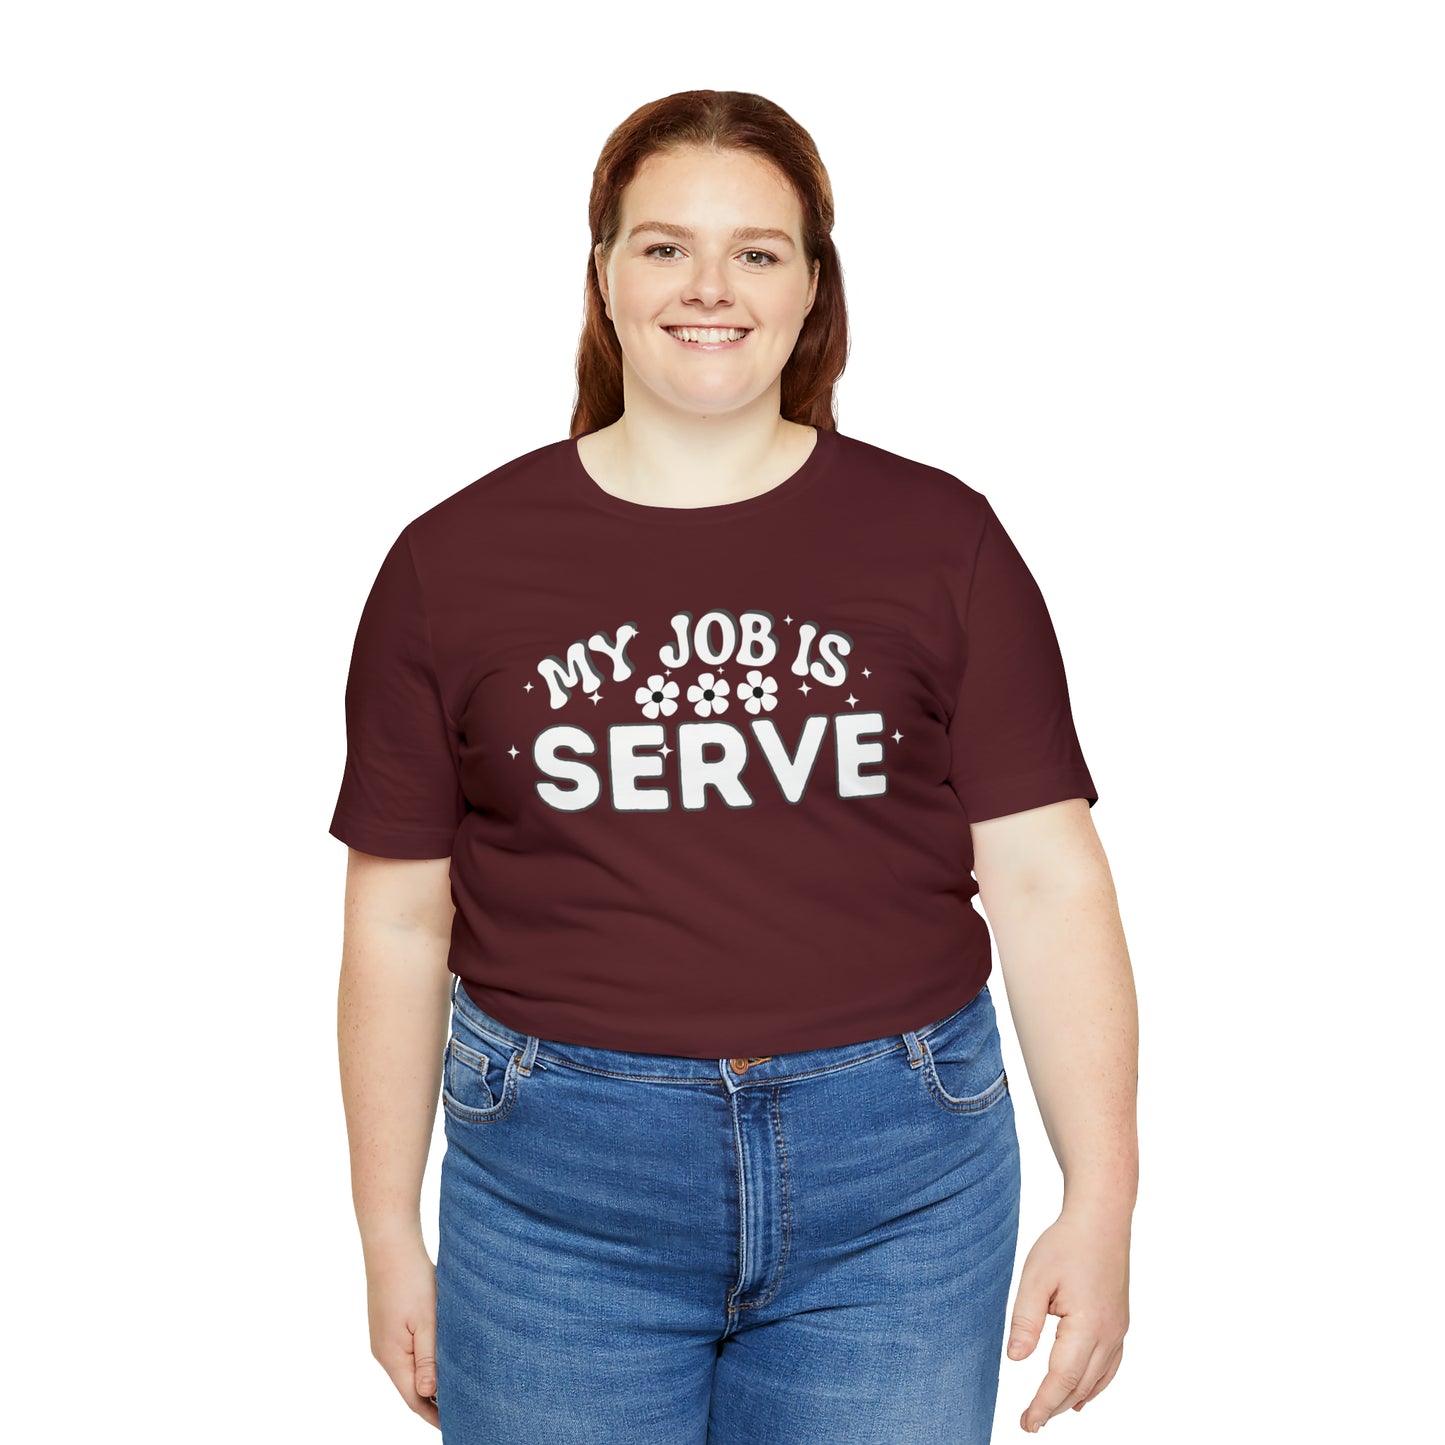 My Job is Serve Shirt Military Shirt Customer Service Shirt Waiter/Waitress Public Servant, Hotel Concierge, Caterer, Flight Attendant, Bartender Barista